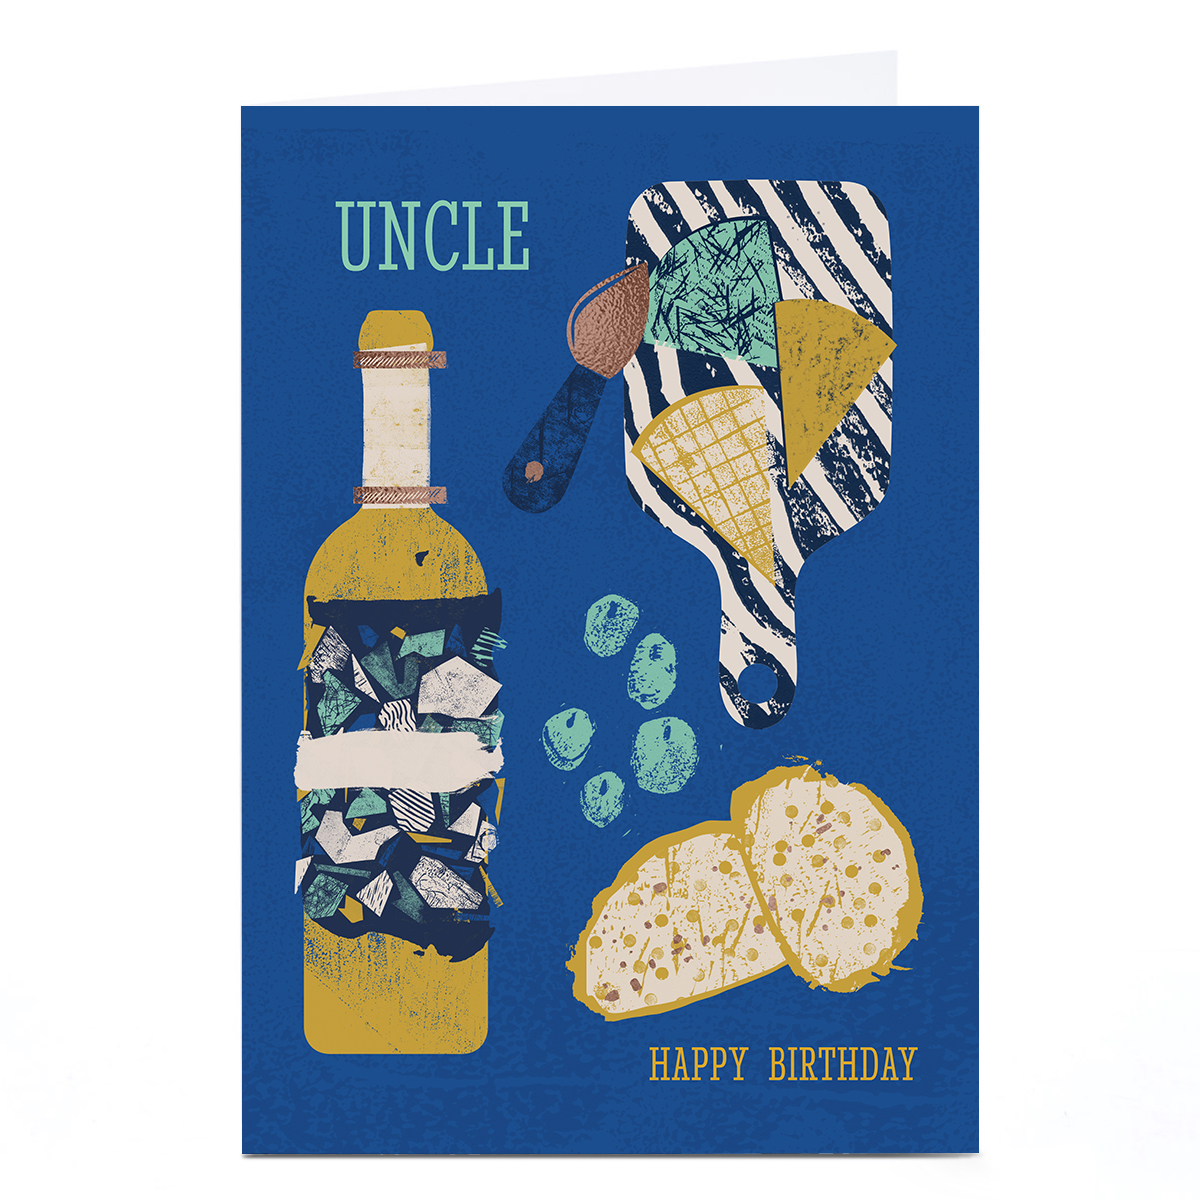 Personalised Rebecca Prinn Birthday Card - Wine & Cheese 